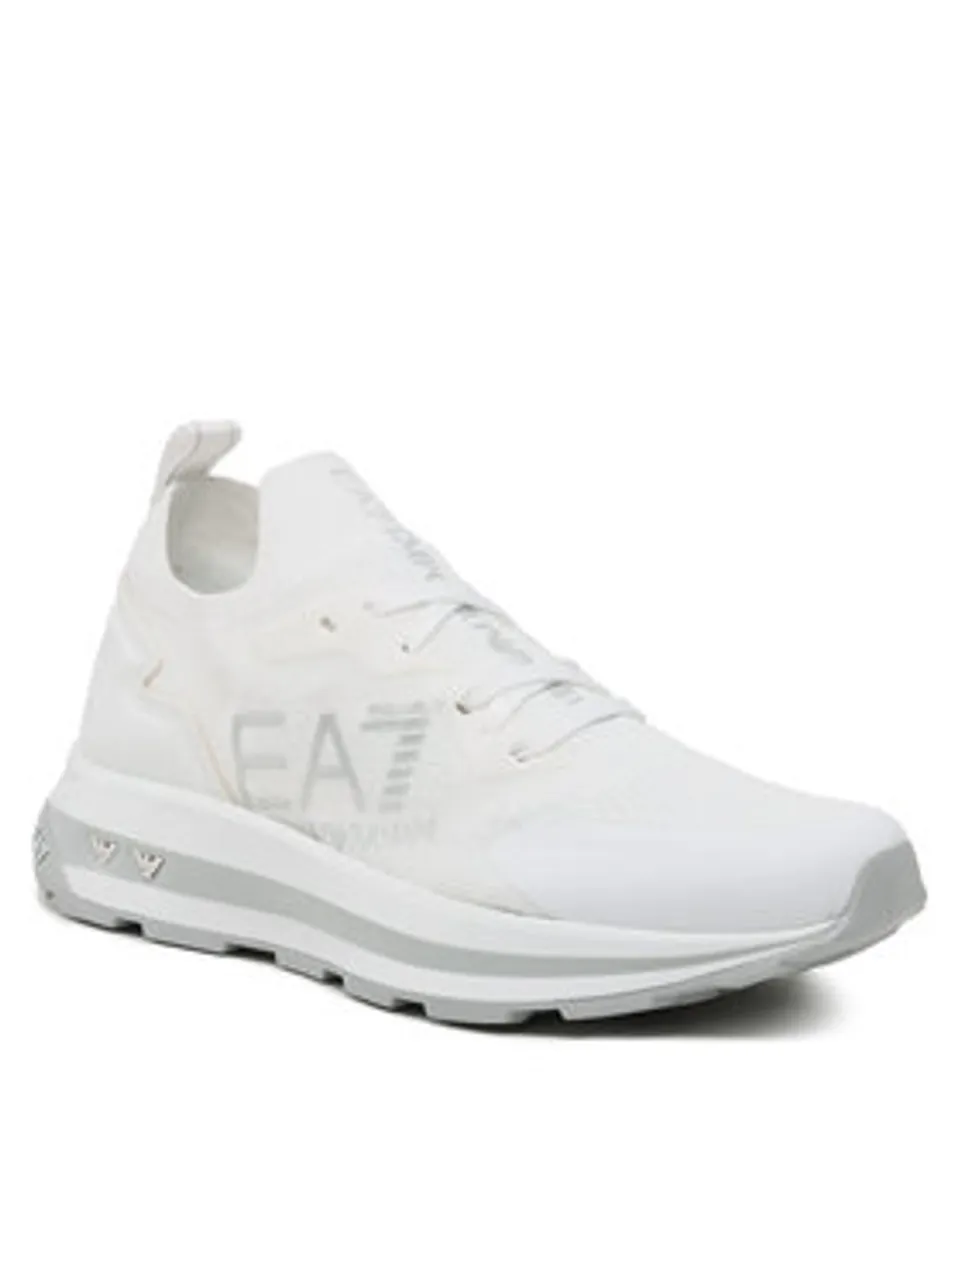 EA7 Emporio Armani Sneakers X8X113 XK269 S308 Weiß